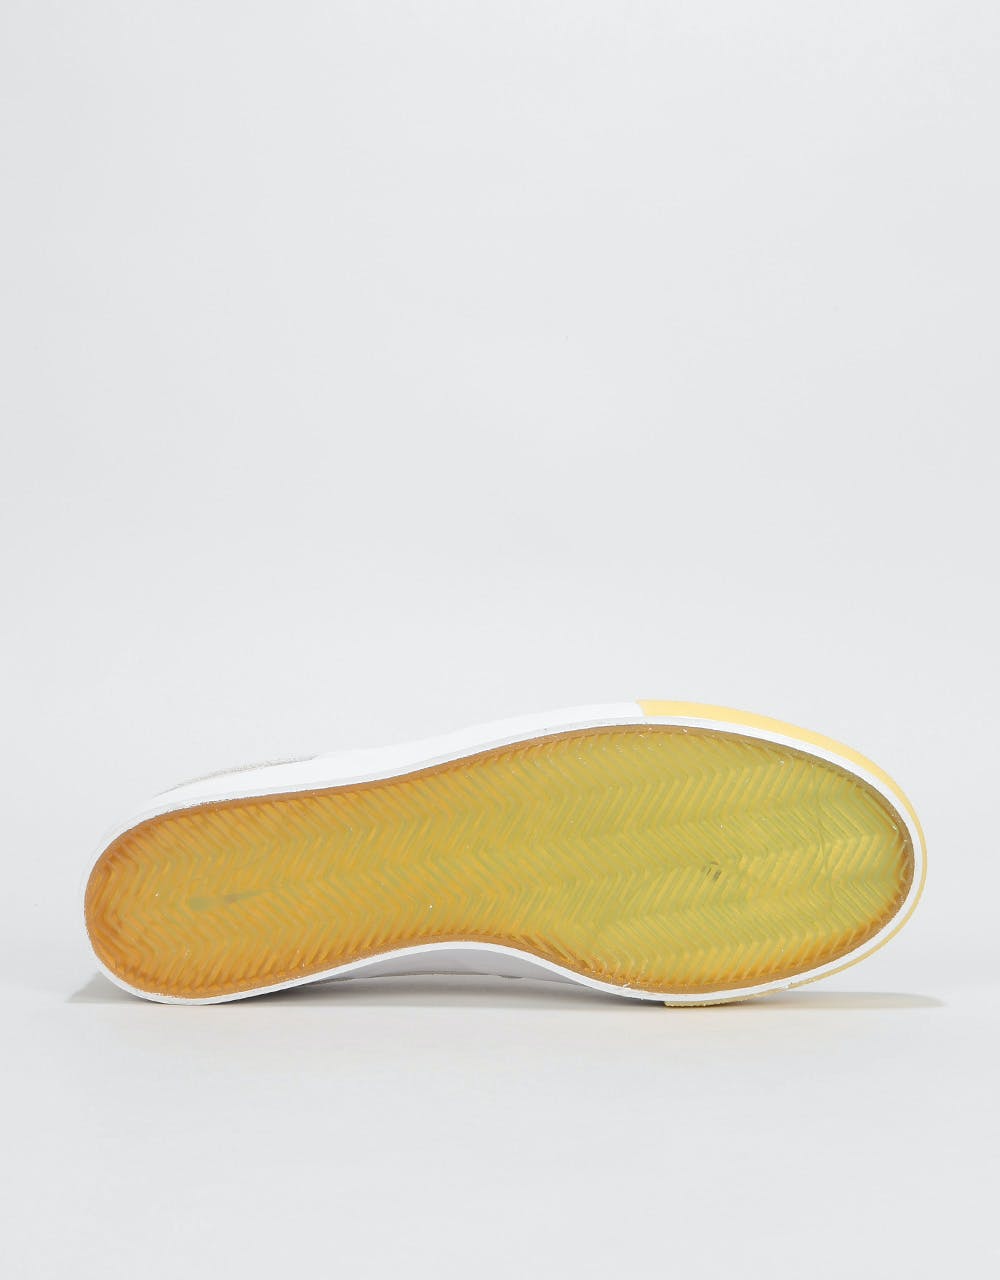 Nike SB Zoom Janoski Slip RM SE Skate Shoes - White-Vast/Grey-Gum